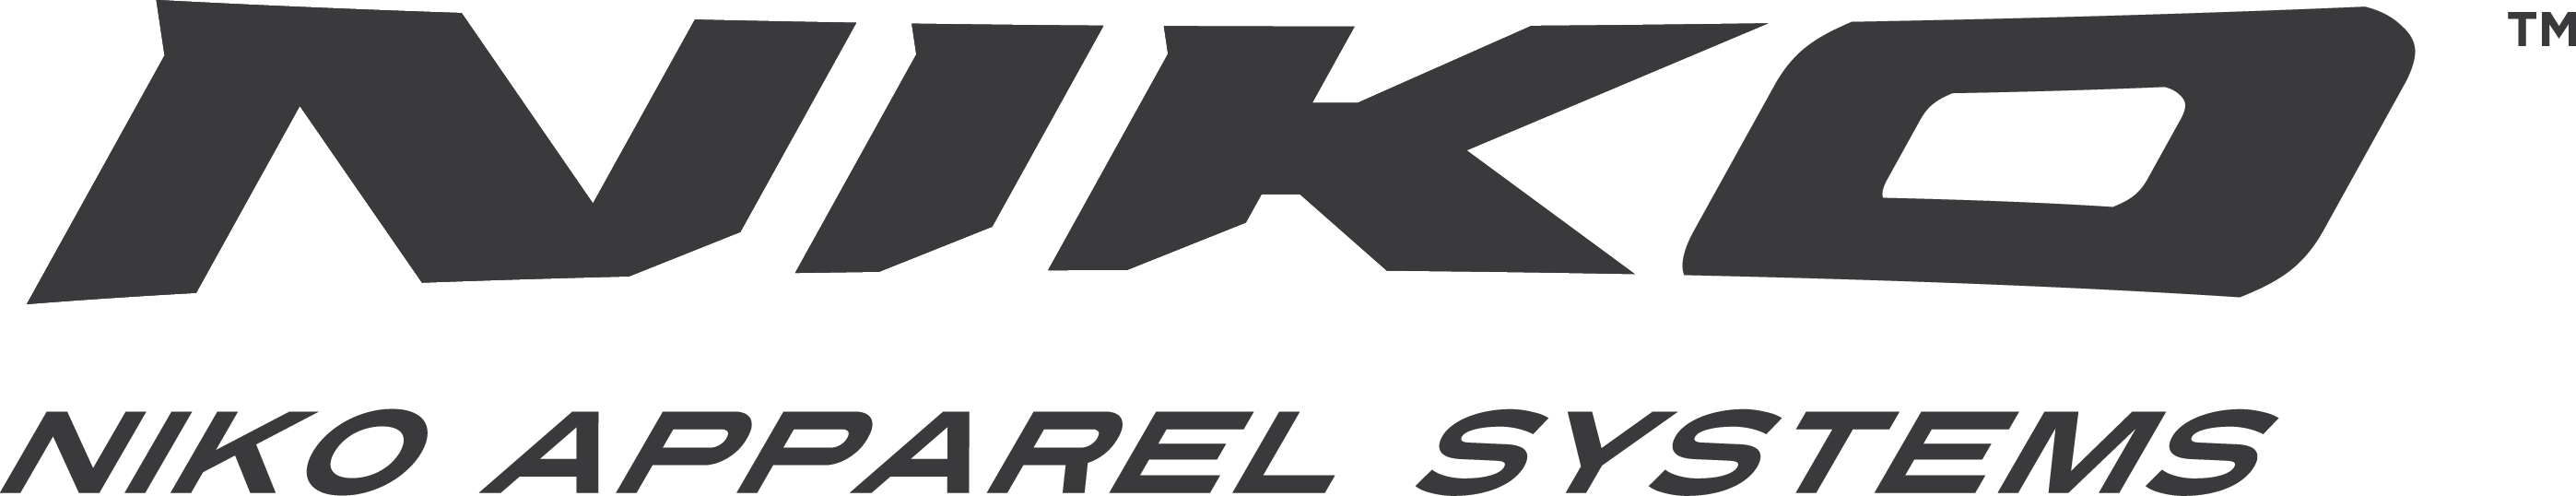 Niko Apparel Systems Logo